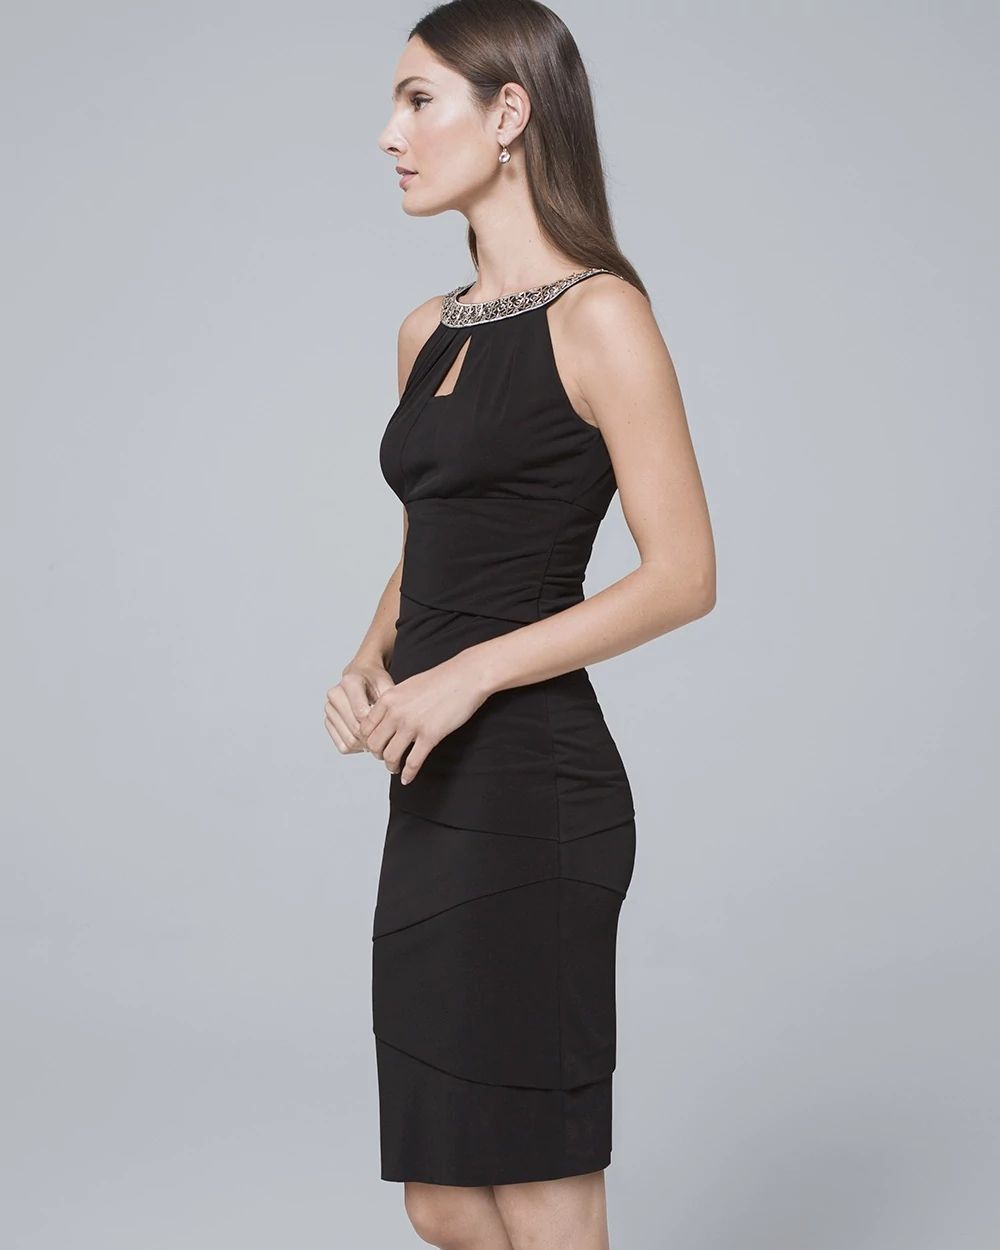 Embellished-Neck Black Instantly Slimming Sheath Dress click to view larger image.